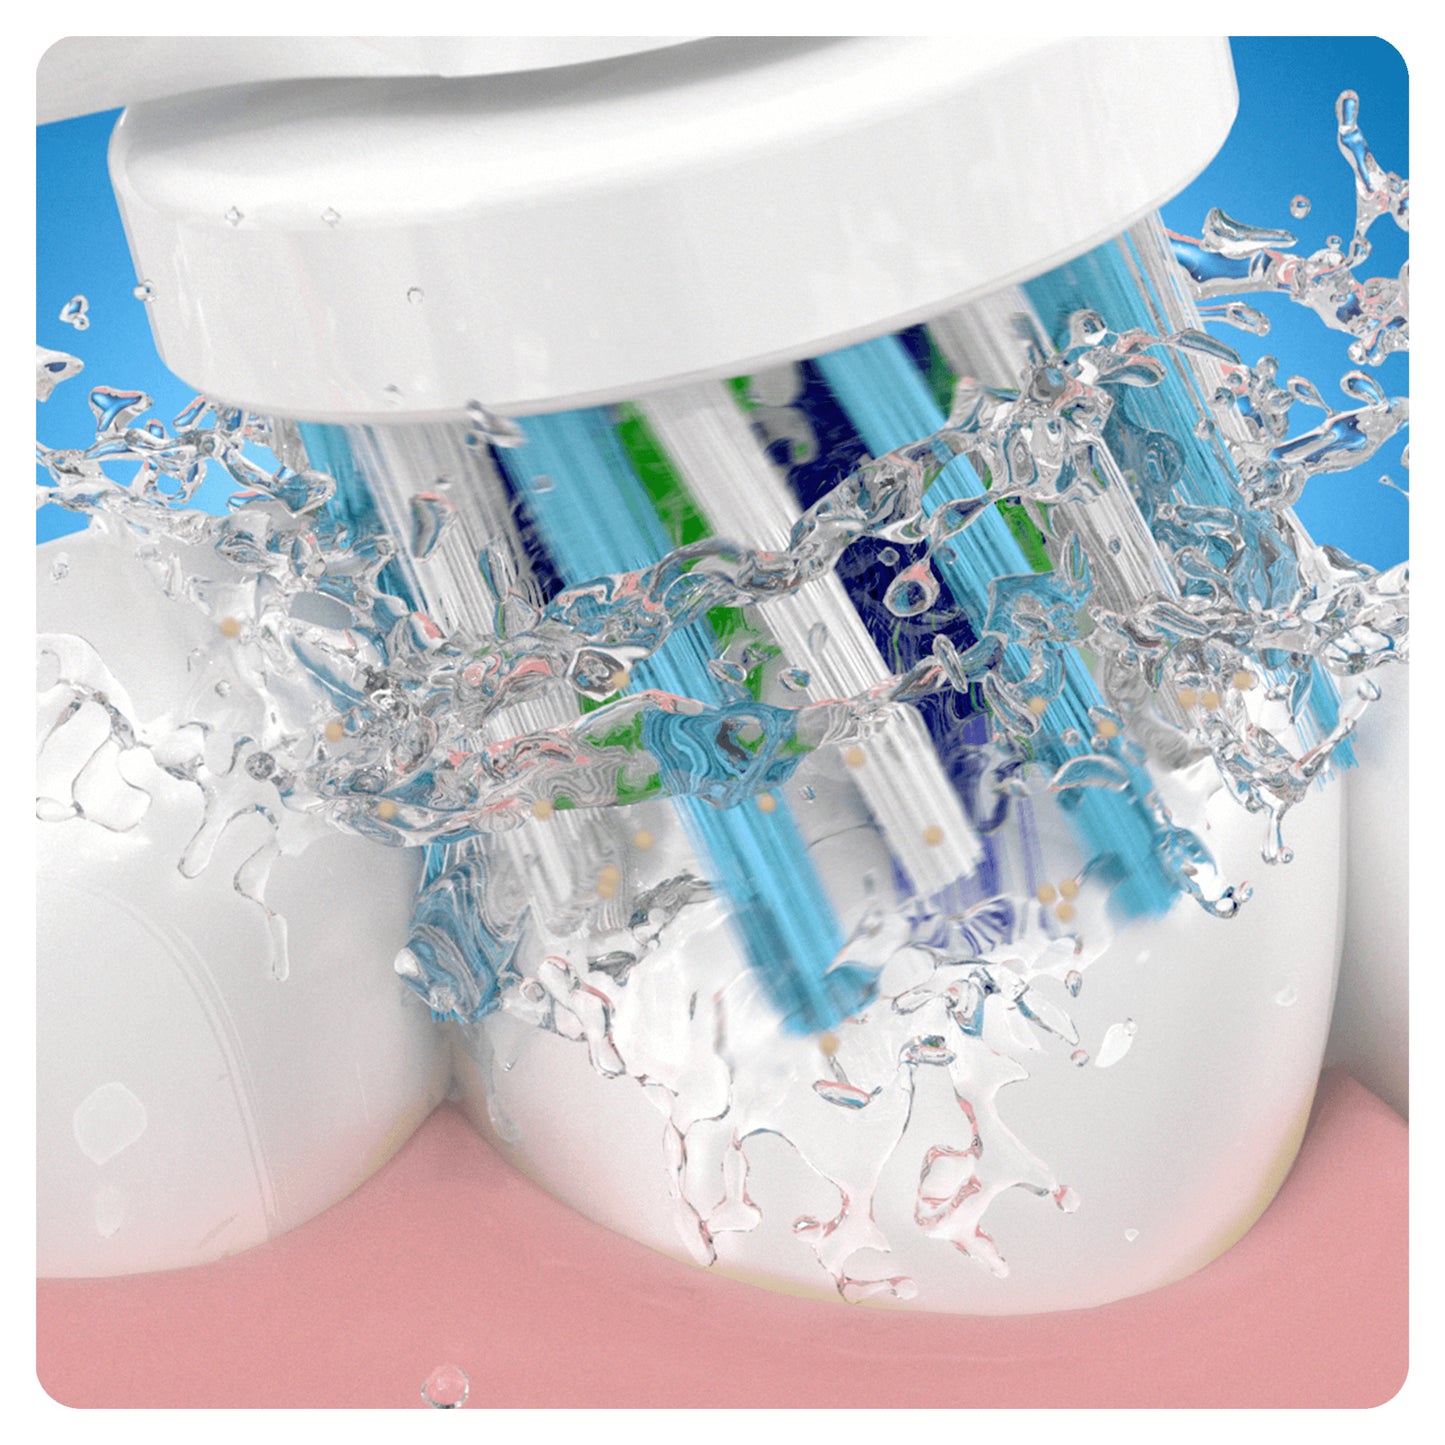 Oral-B PRO 600 CrossAction elektrische tandenborstel met timer